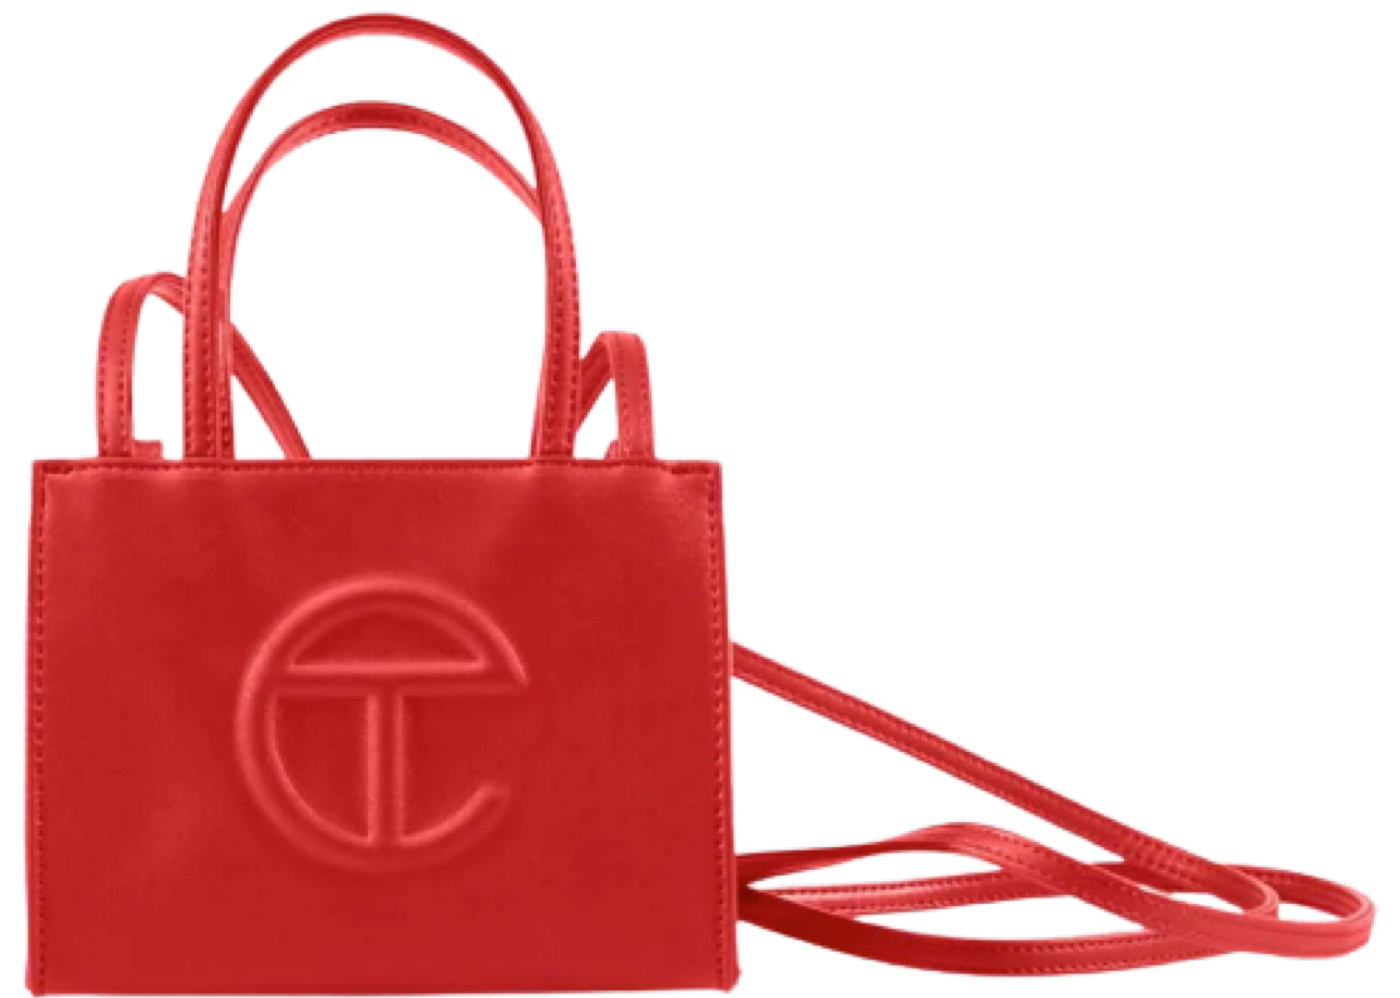 Telfar Small Red Shopping Bag